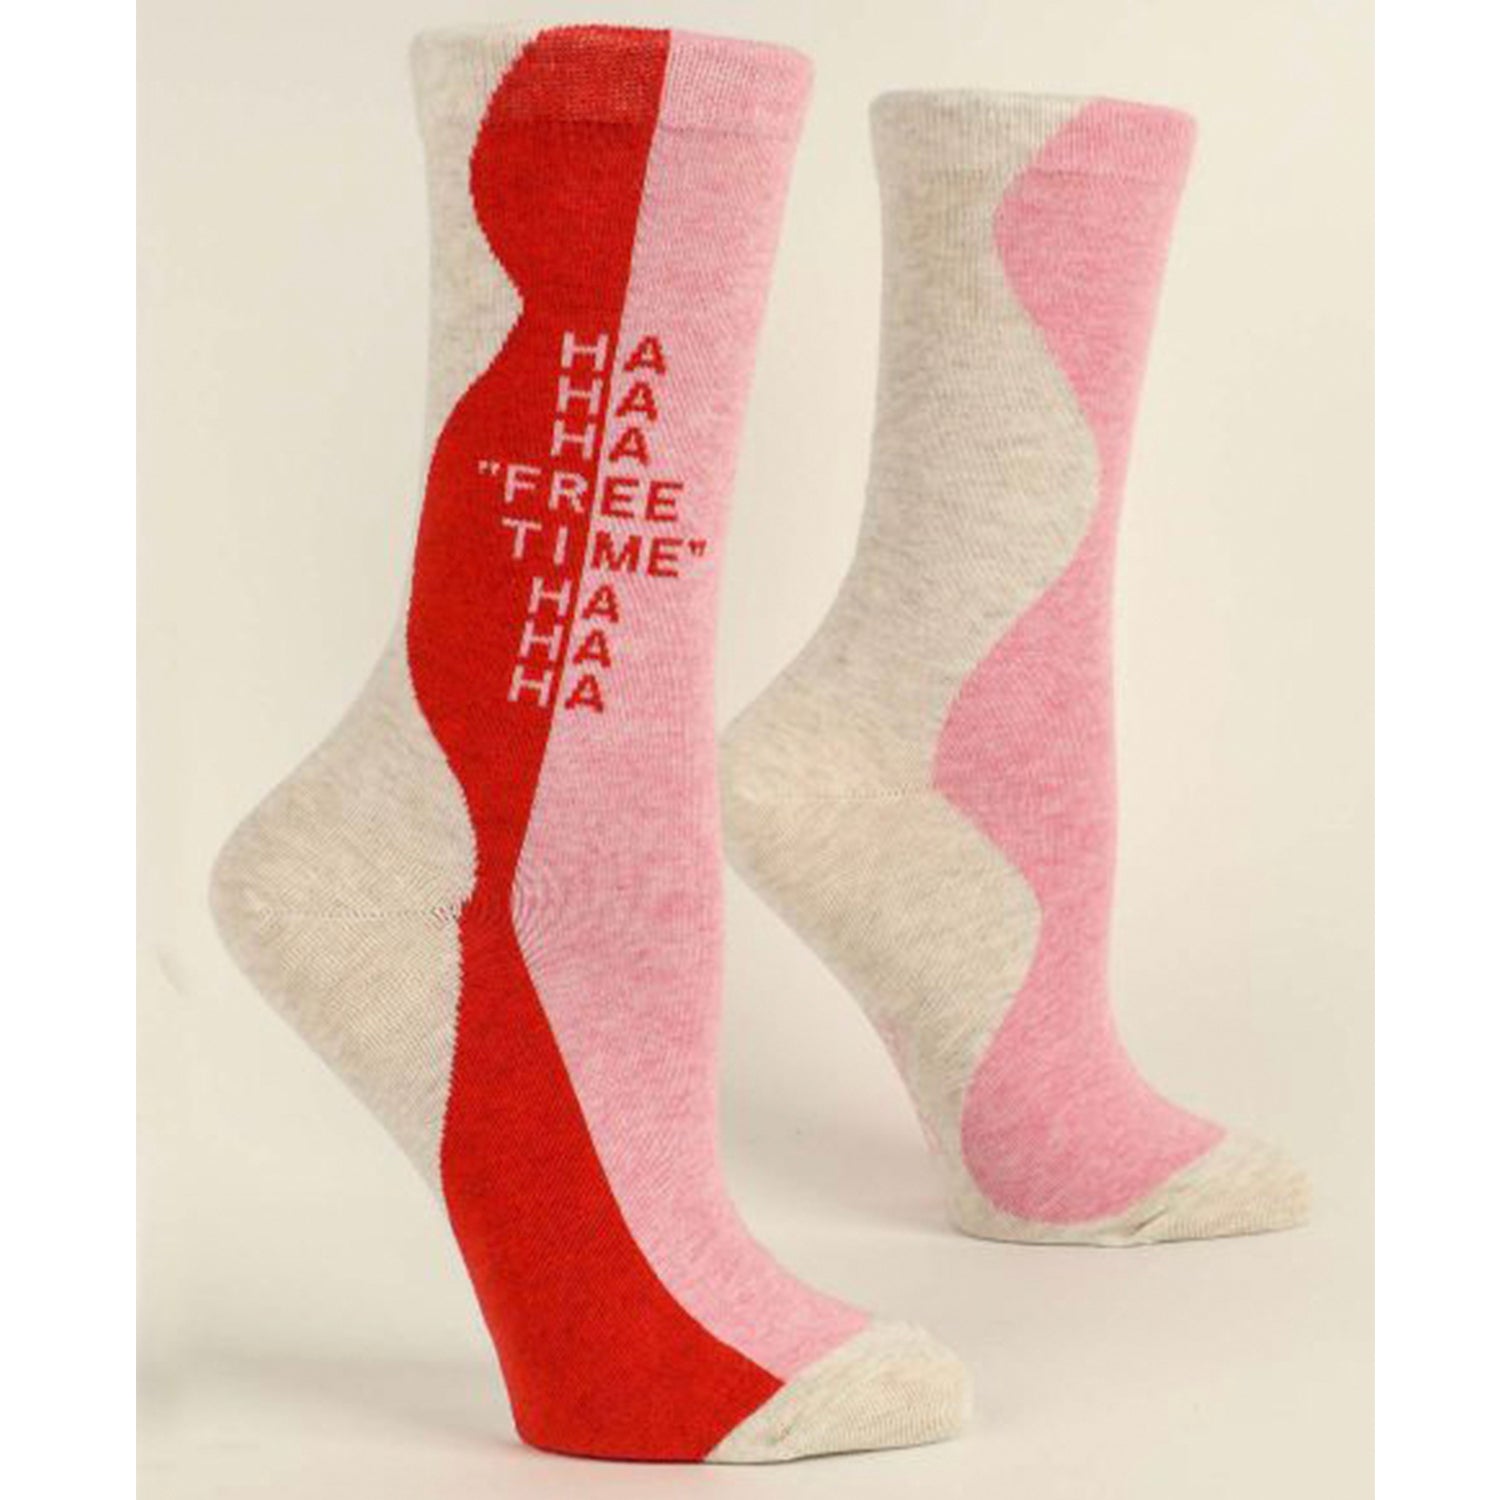 BlueQ Free Time Women's Socks